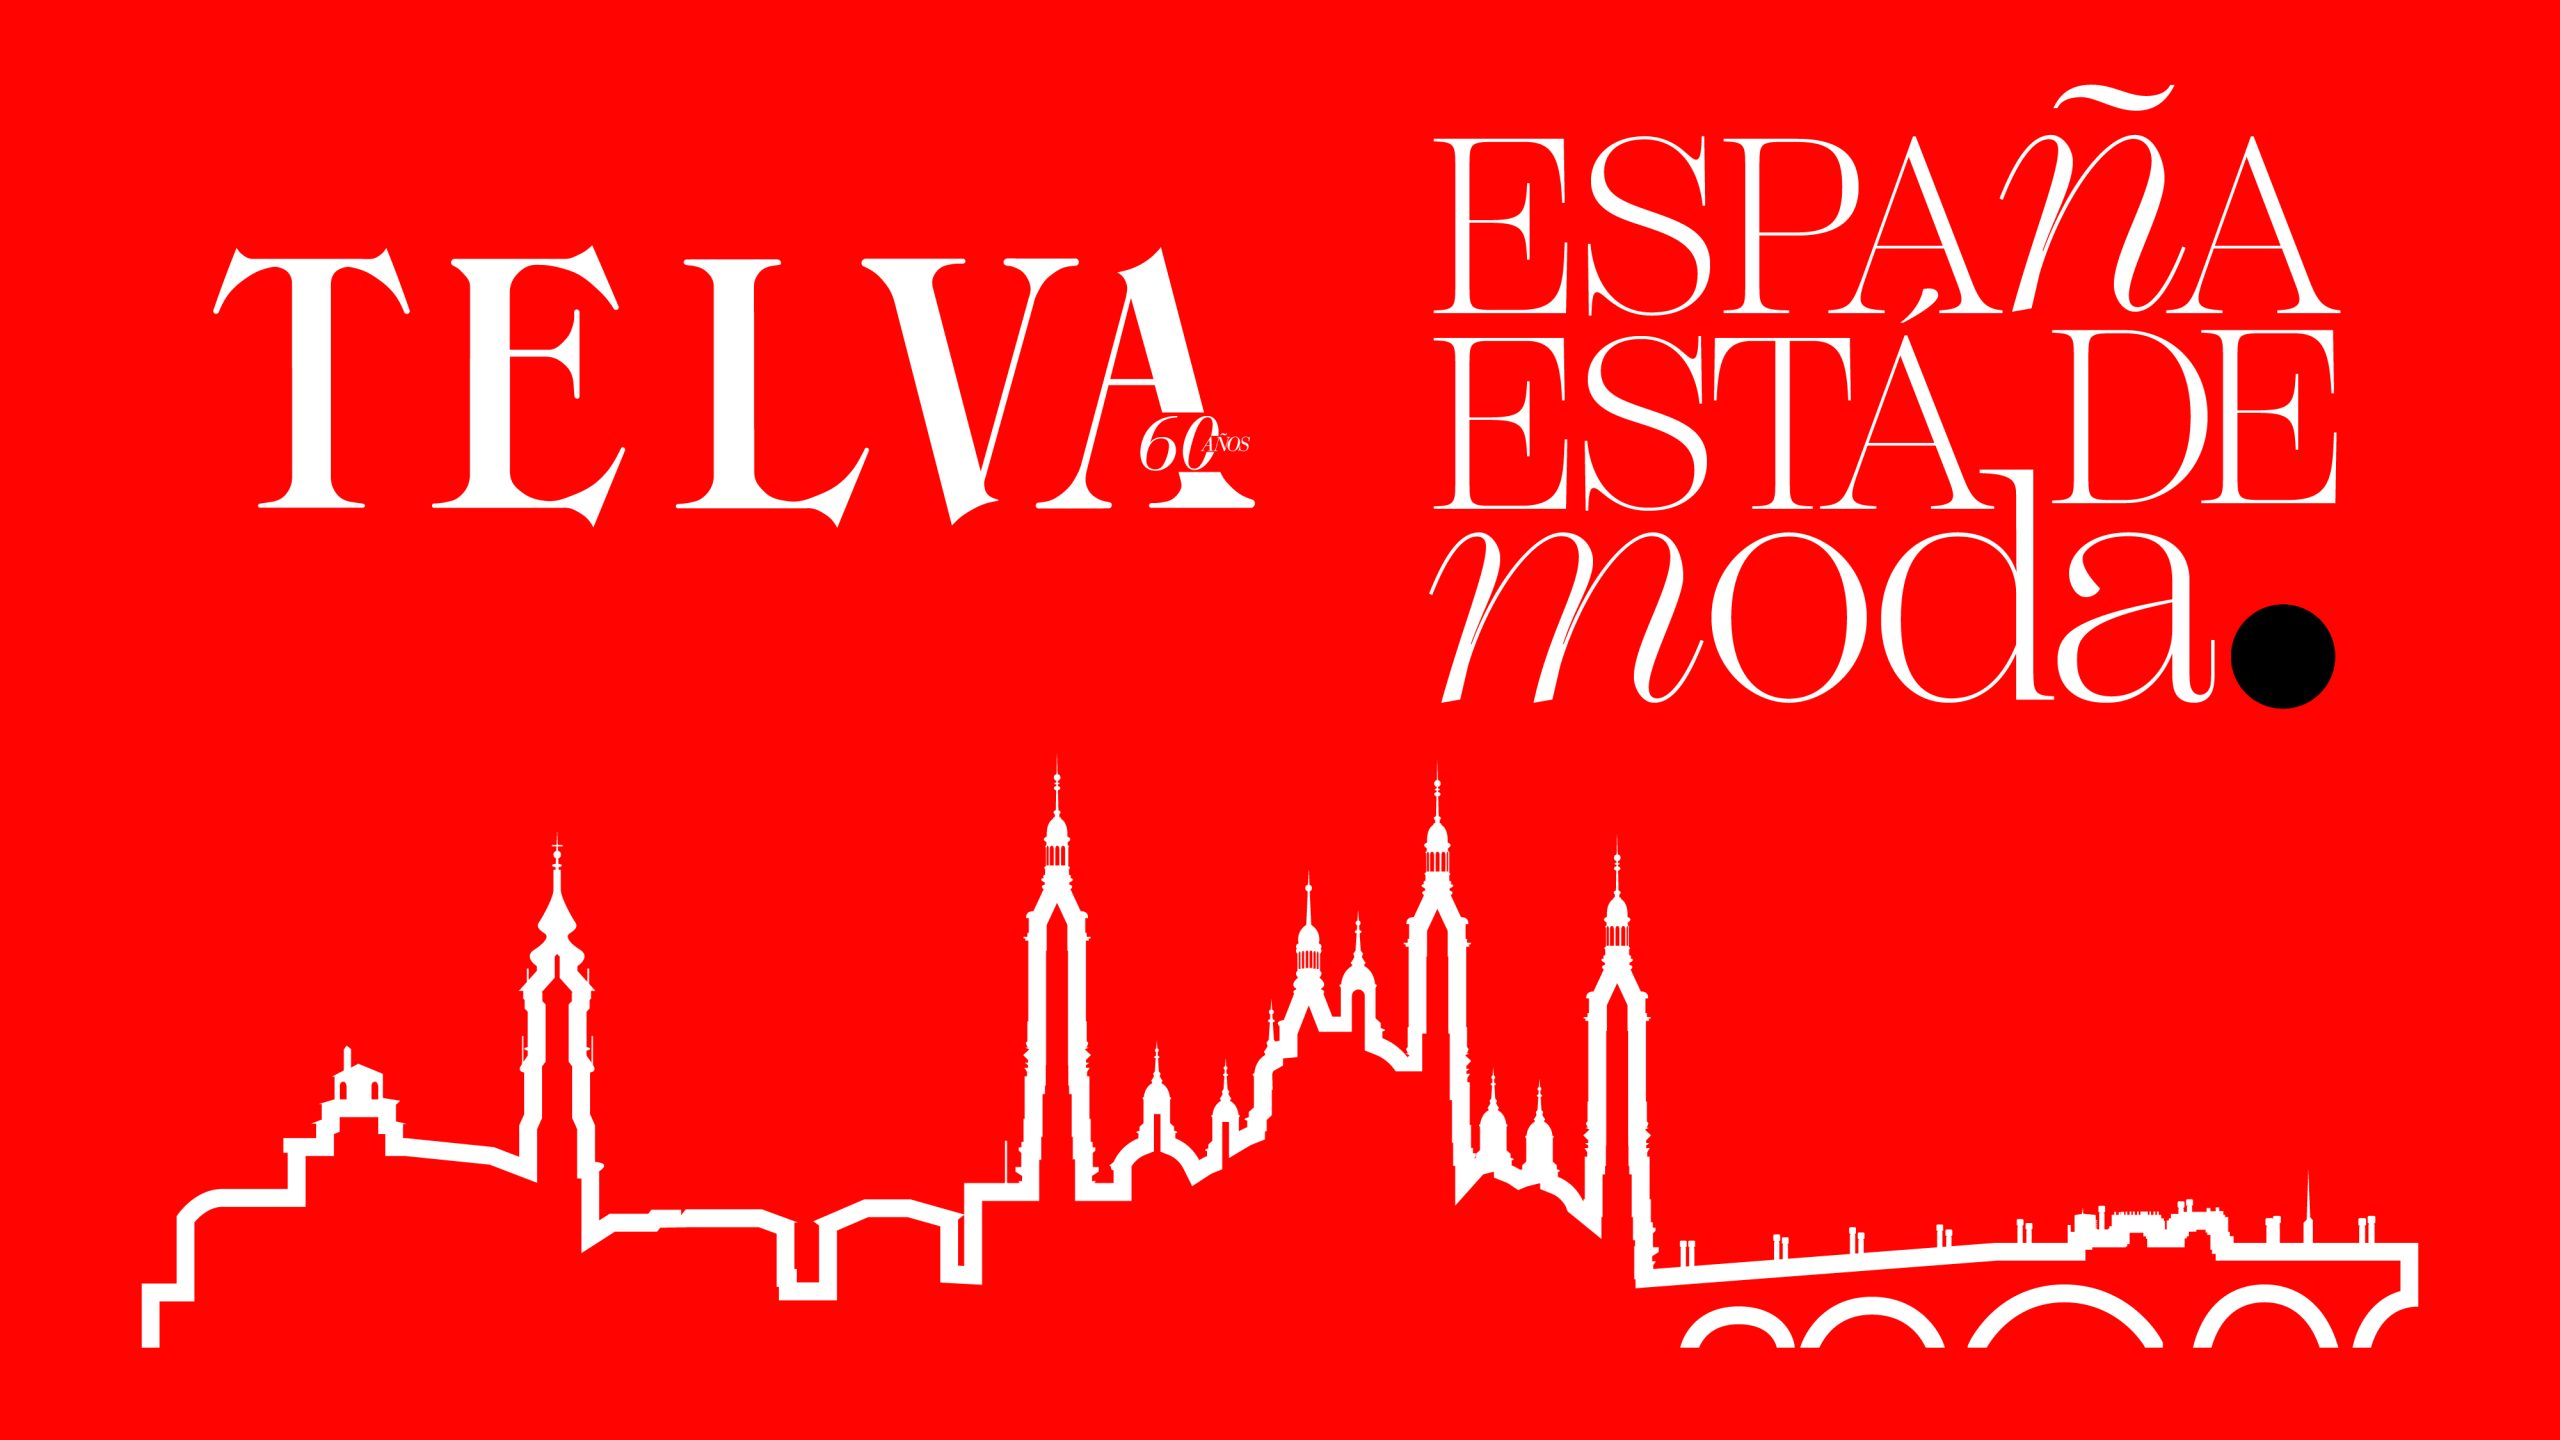 España está de moda” TELVA celebra su 60 aniversario - Enjoy Zaragoza